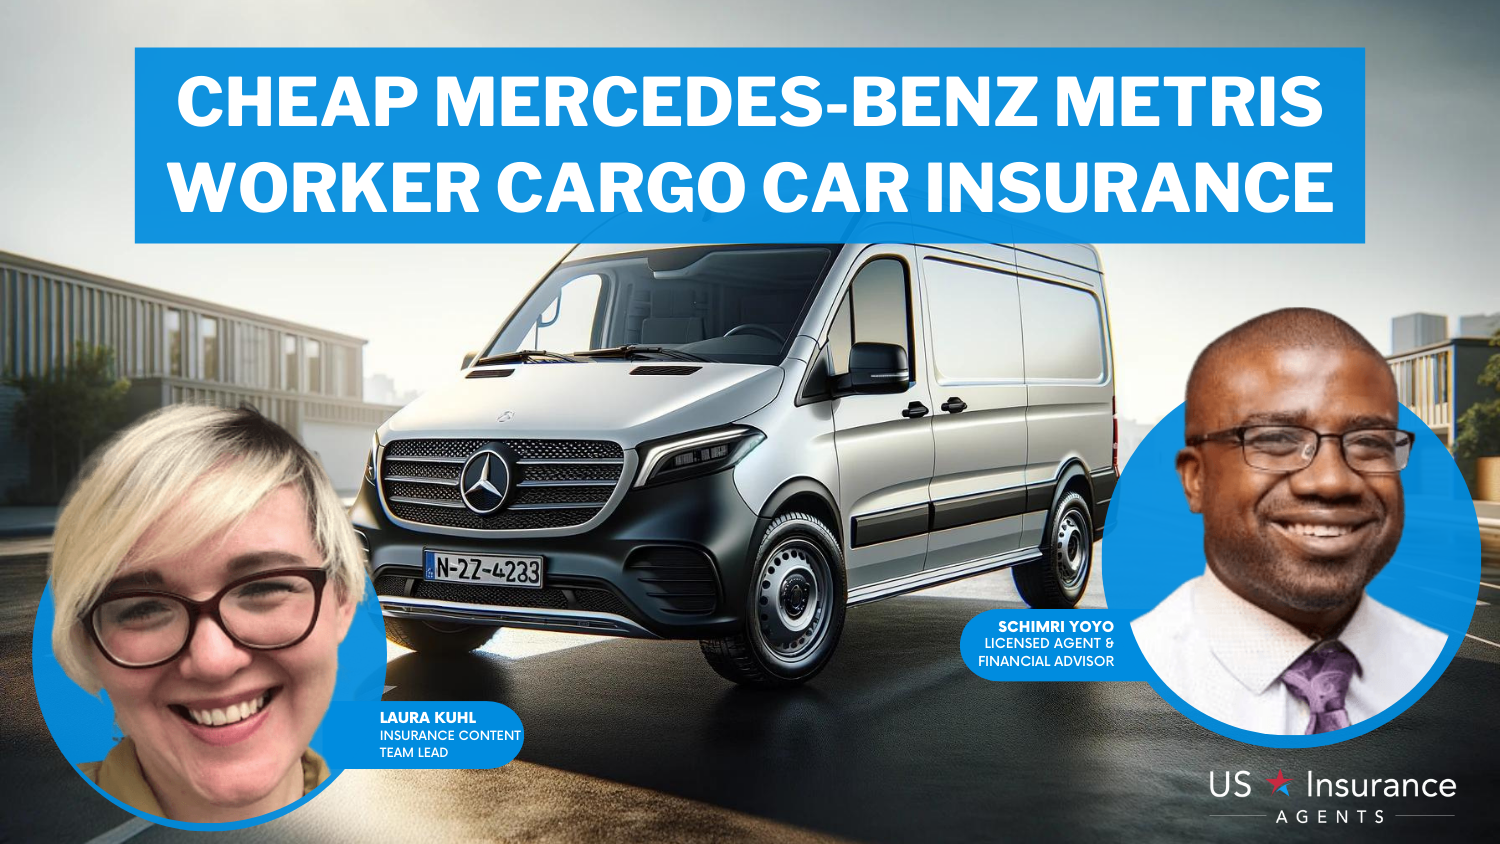 State Farm, USAA and Progressive: cheap Mercedes-Benz Metris WORKER Cargo car insurance